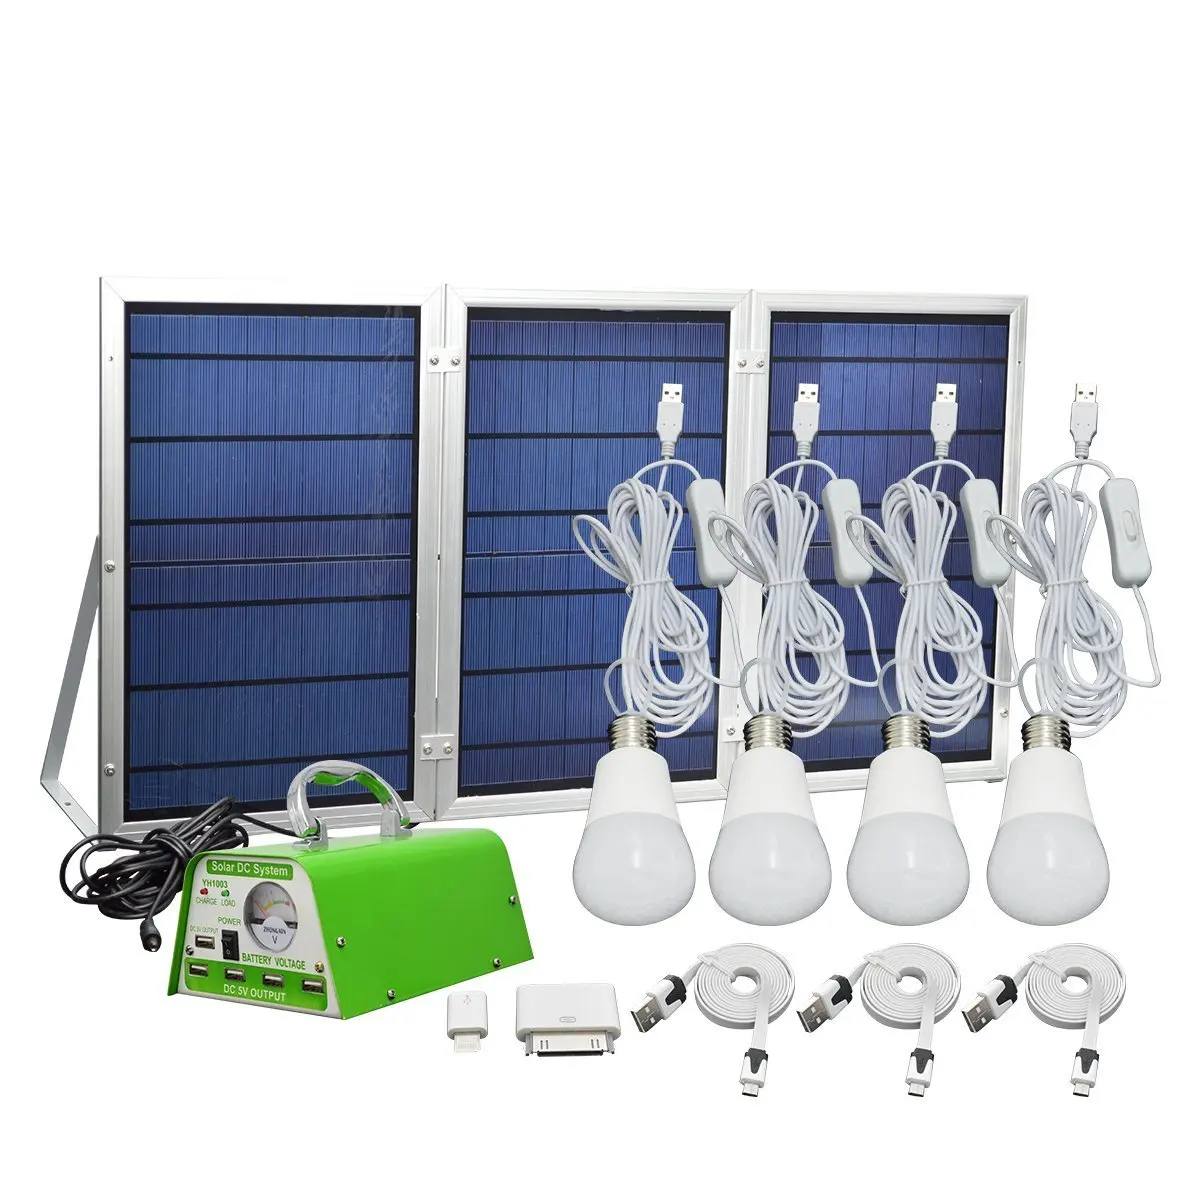 30W 11V multifunctional Foldable small solar panel Green lighting kit /solar bulb lighting system/for home /indoor / camping